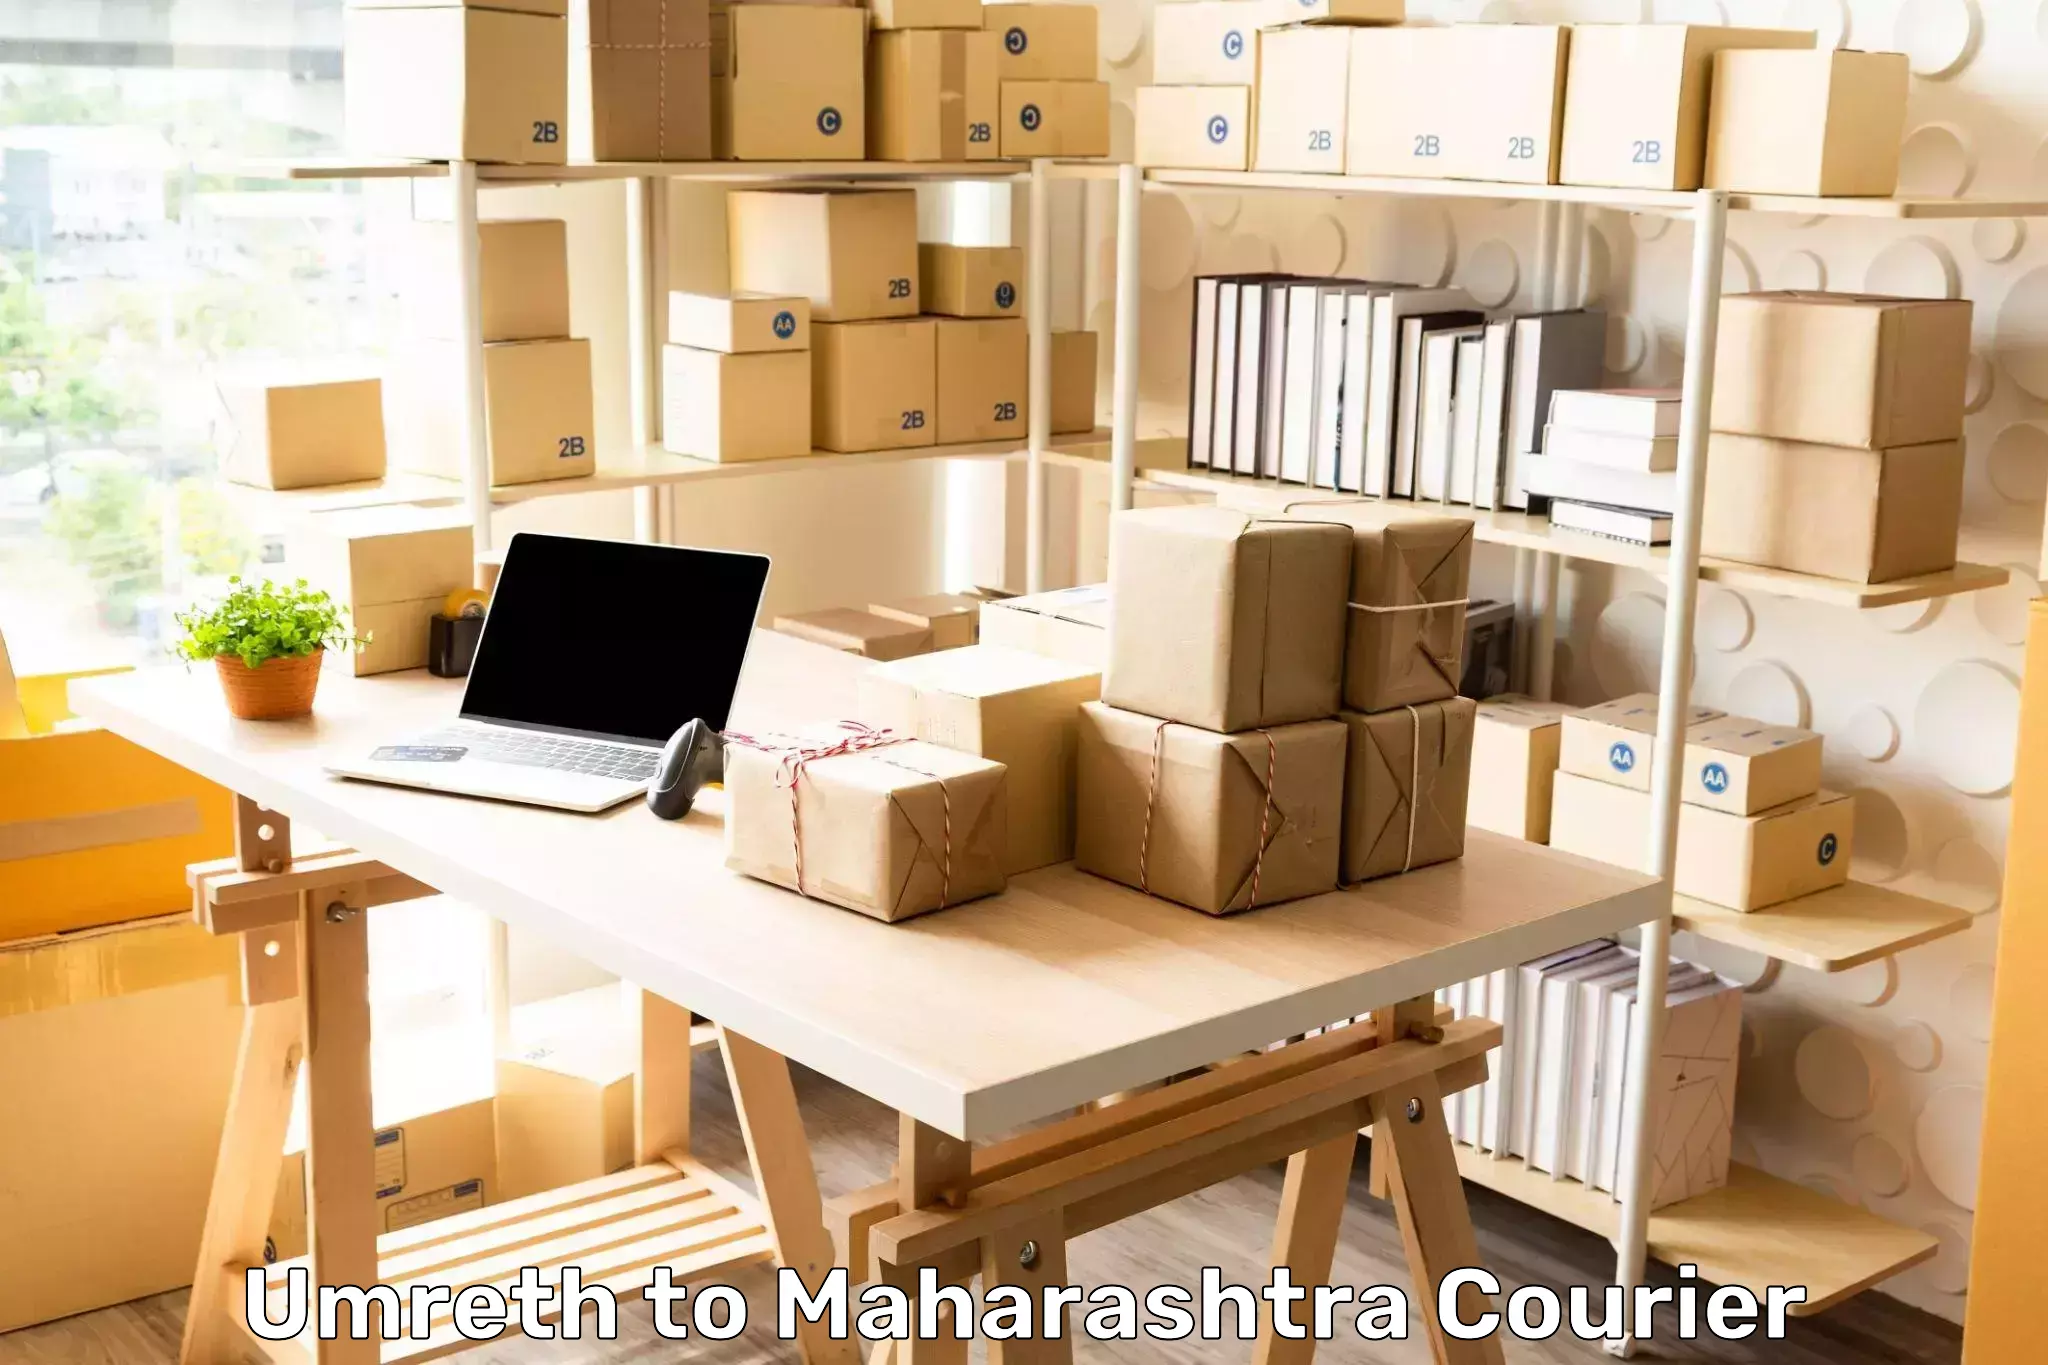 Parcel service for businesses Umreth to Maharashtra